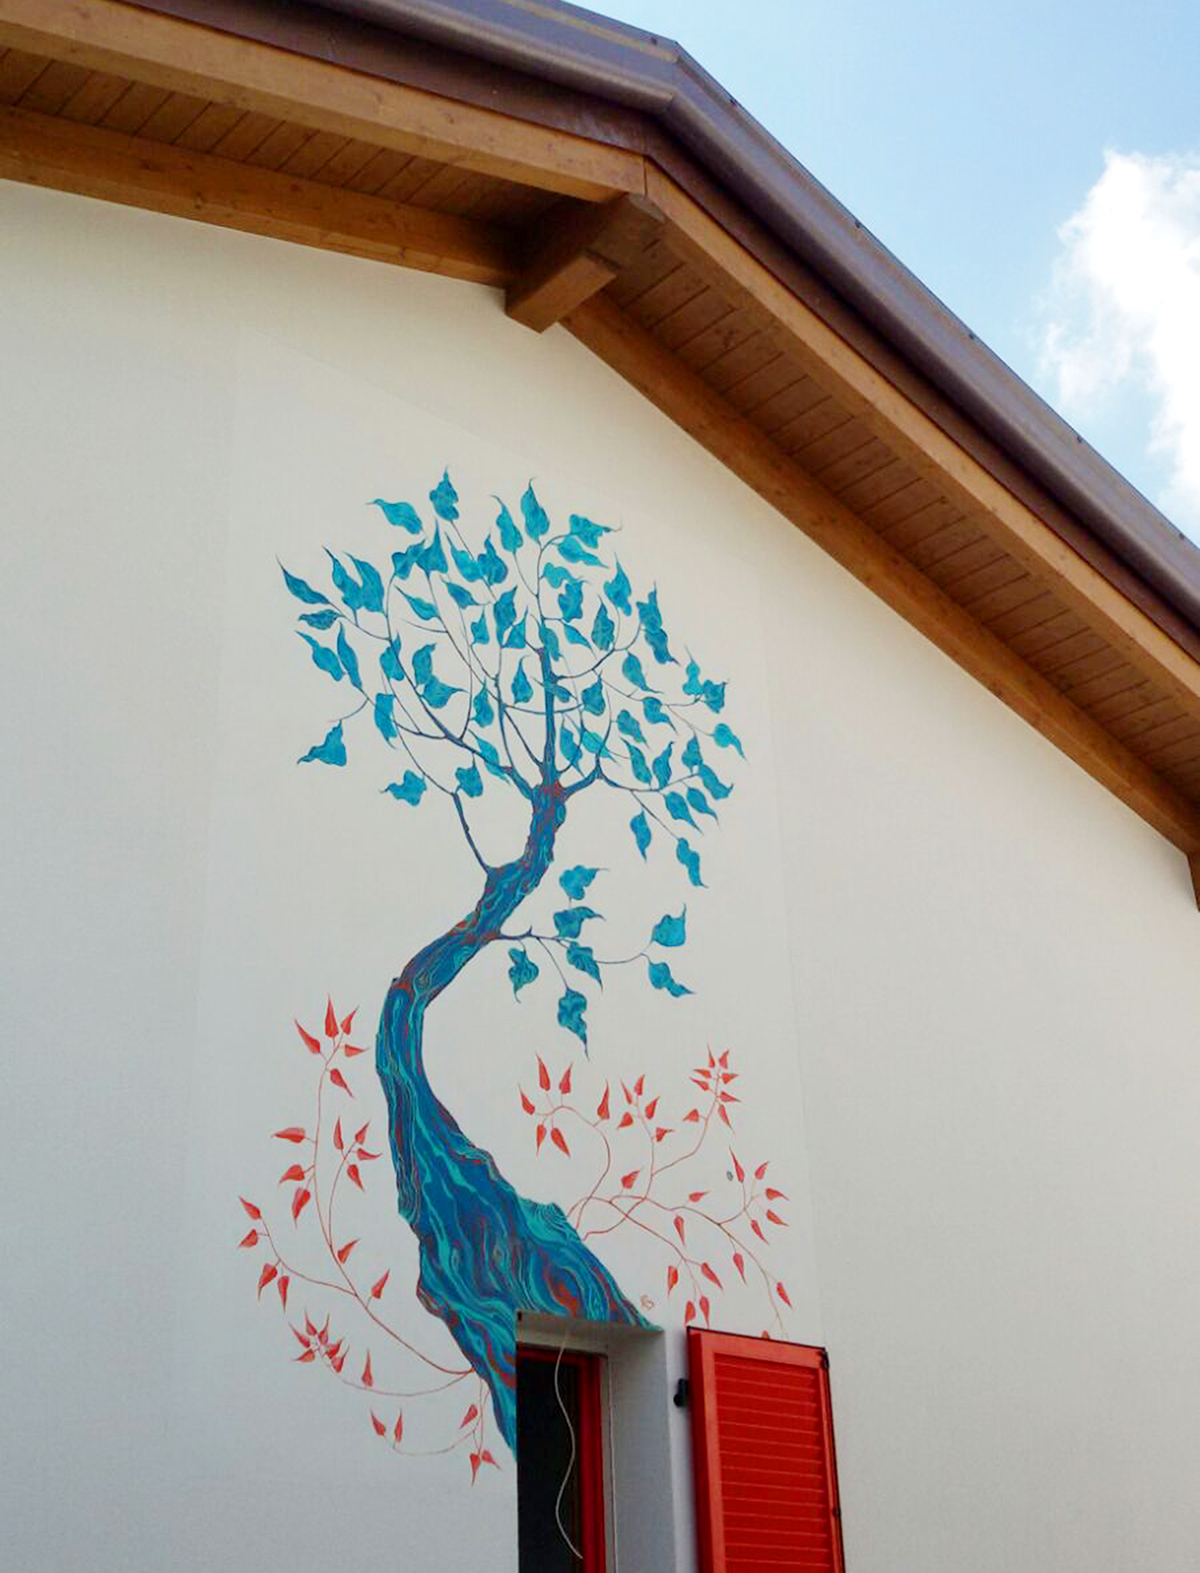 Tree  pumarolas valentinaaglieri Murals blue red turquoise brush paint Italy milano decoration wall home